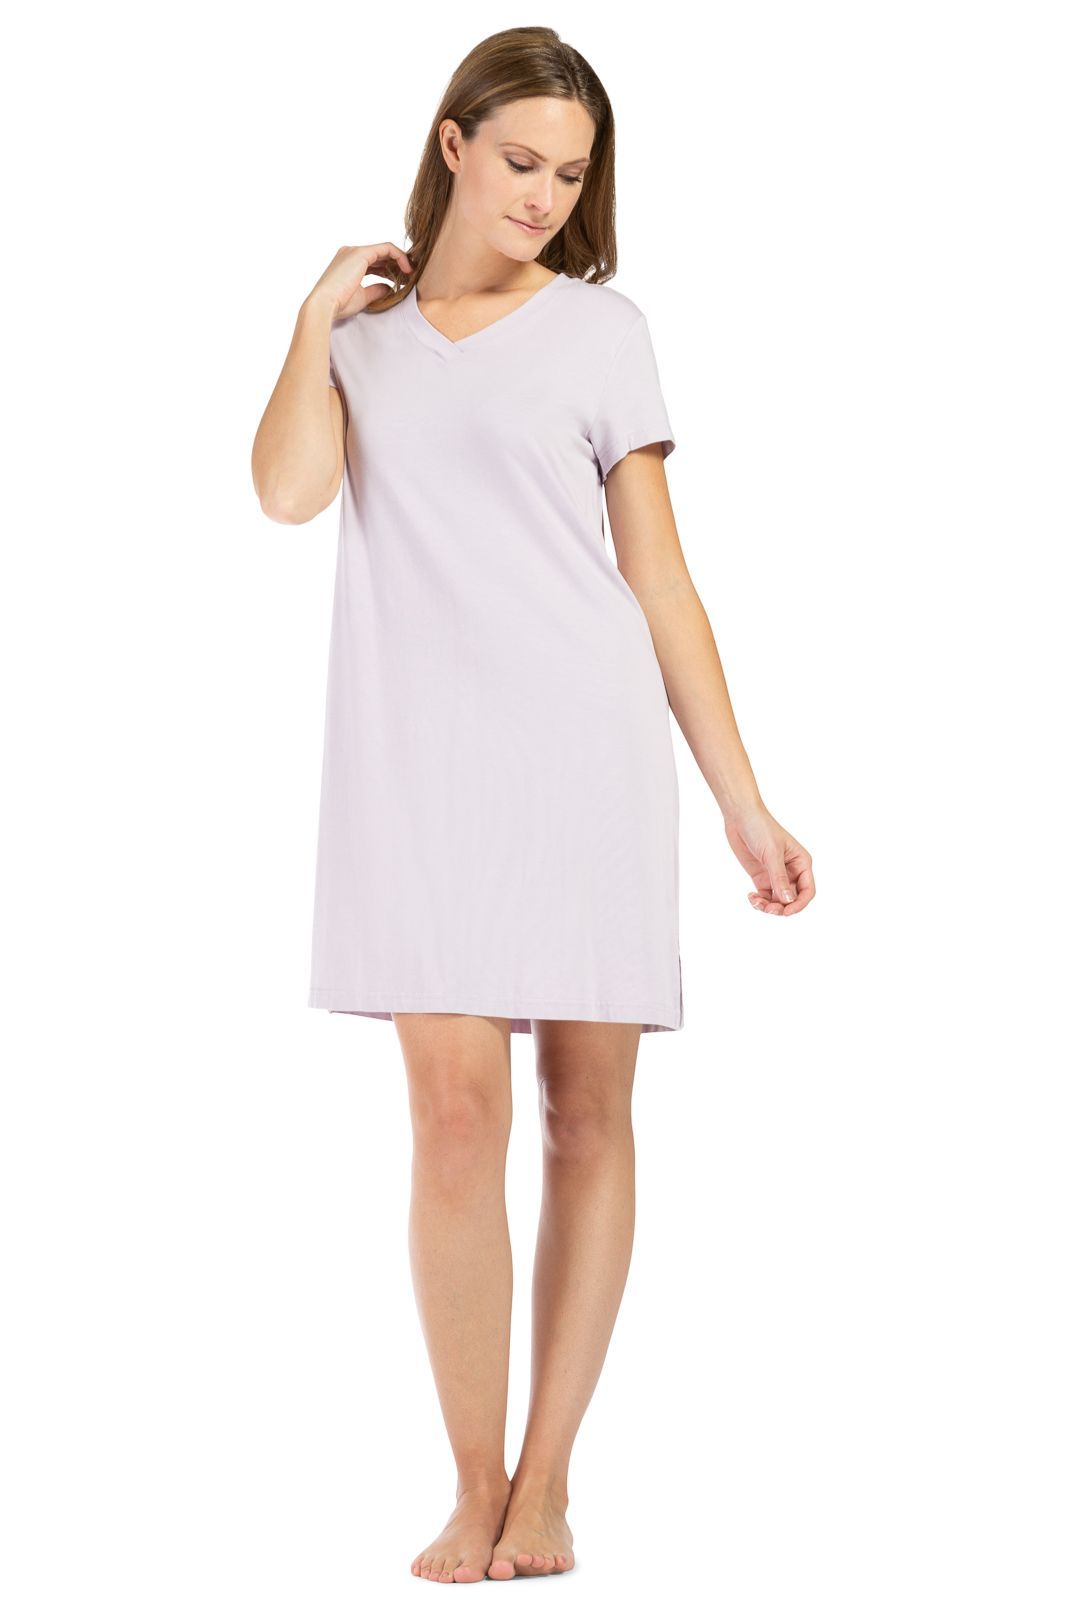 The Best Women's Nightgowns & Sleep Shirts